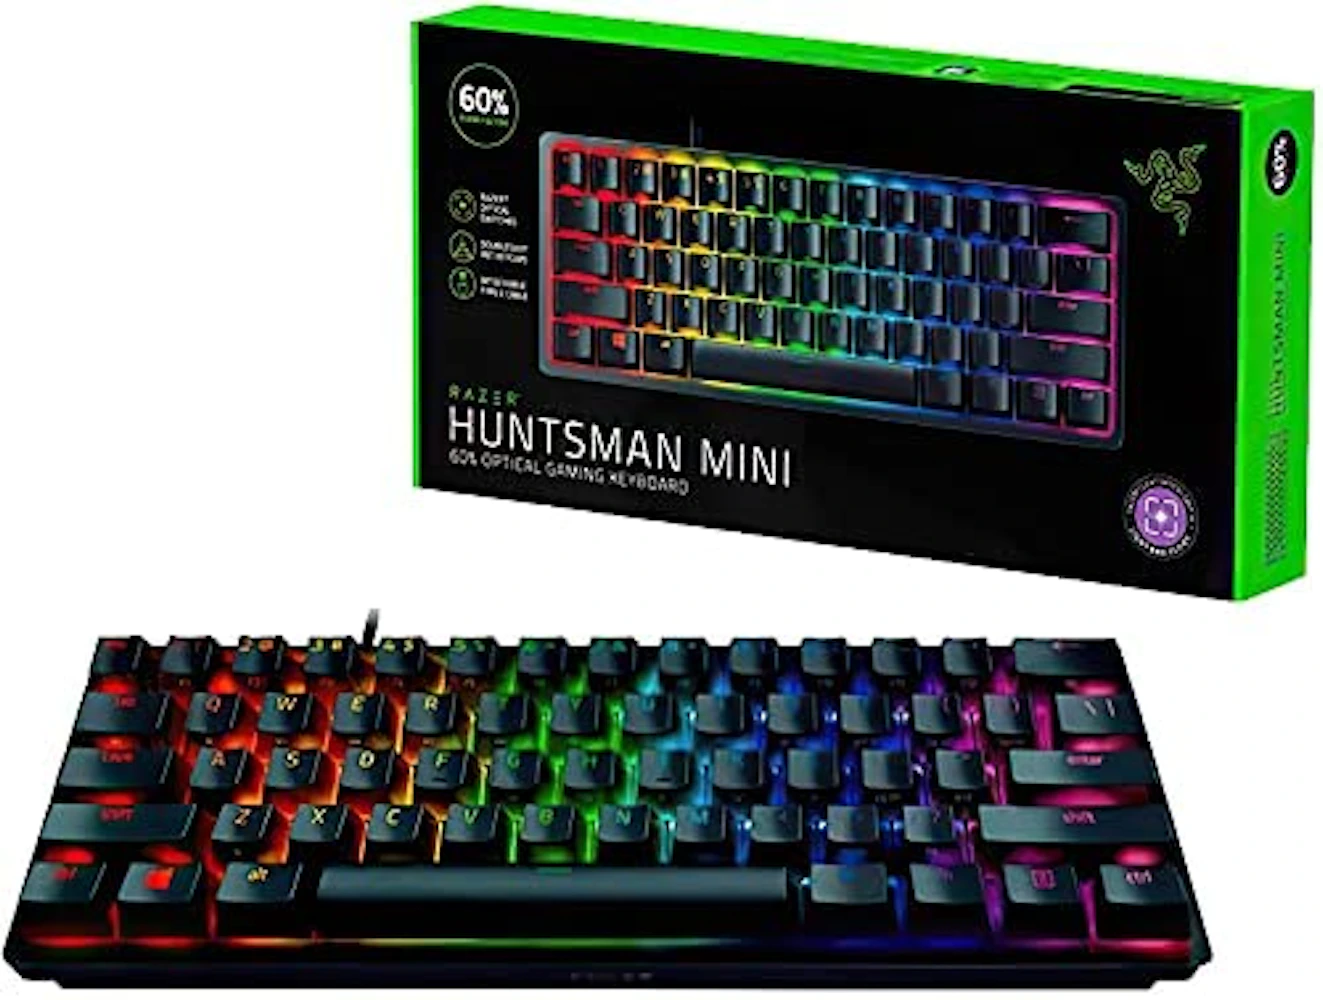 Razer Huntsman Mini 60% Wired Gaming Keyboard RZ03-03390500-R3U1 Black - IT